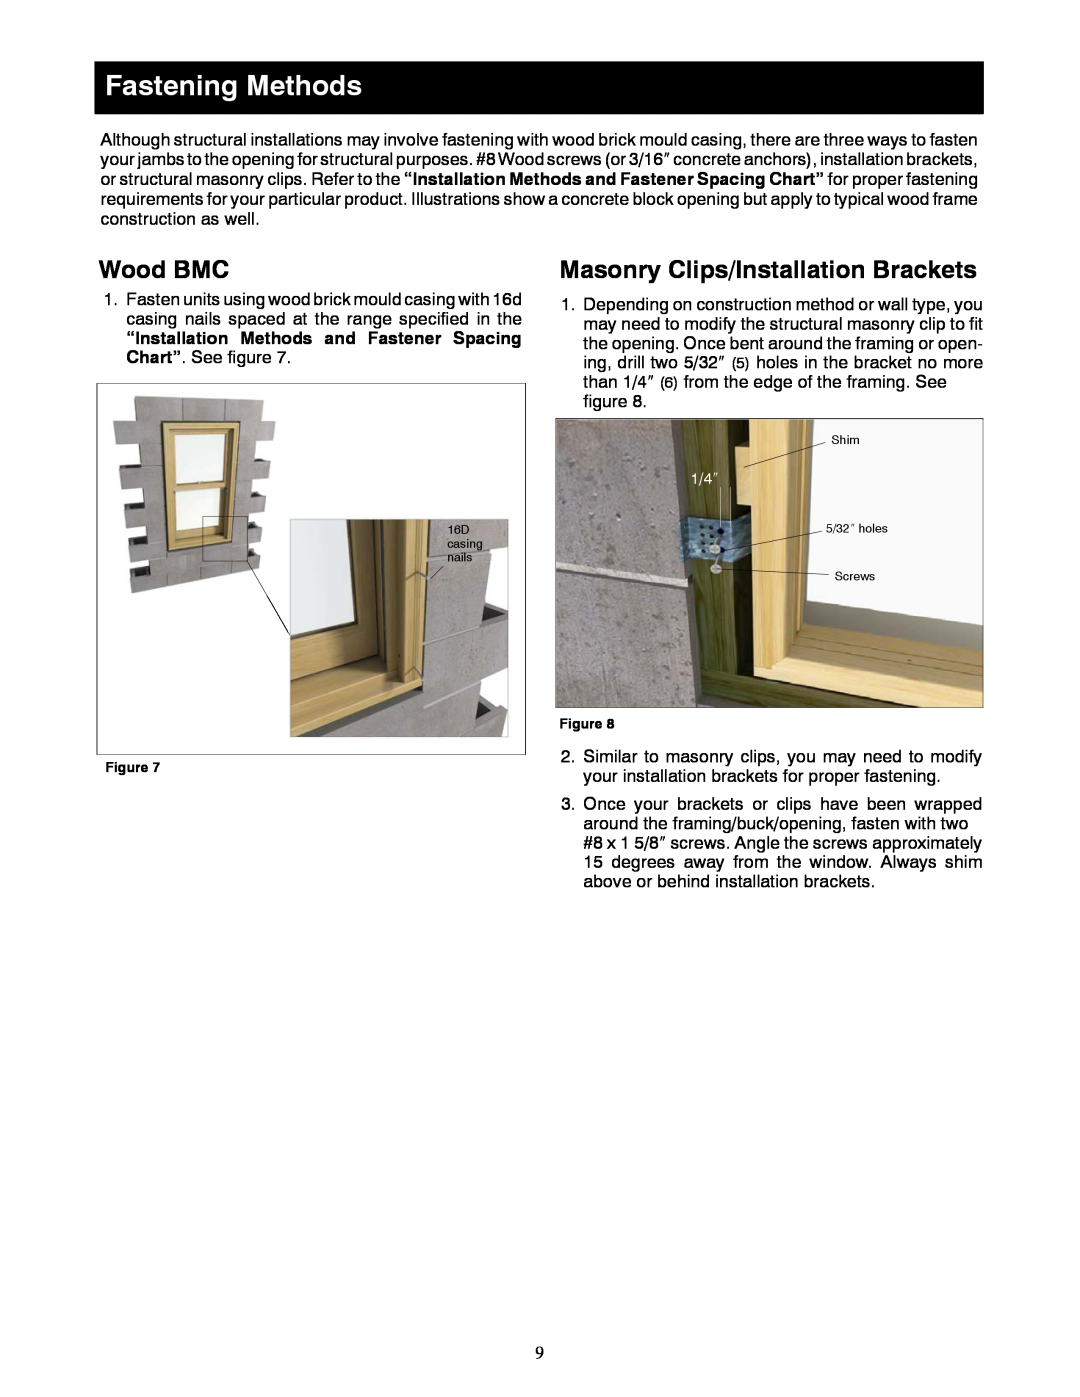 Marvin Window manual Fastening Methods, Wood BMC, Masonry Clips/Installation Brackets 